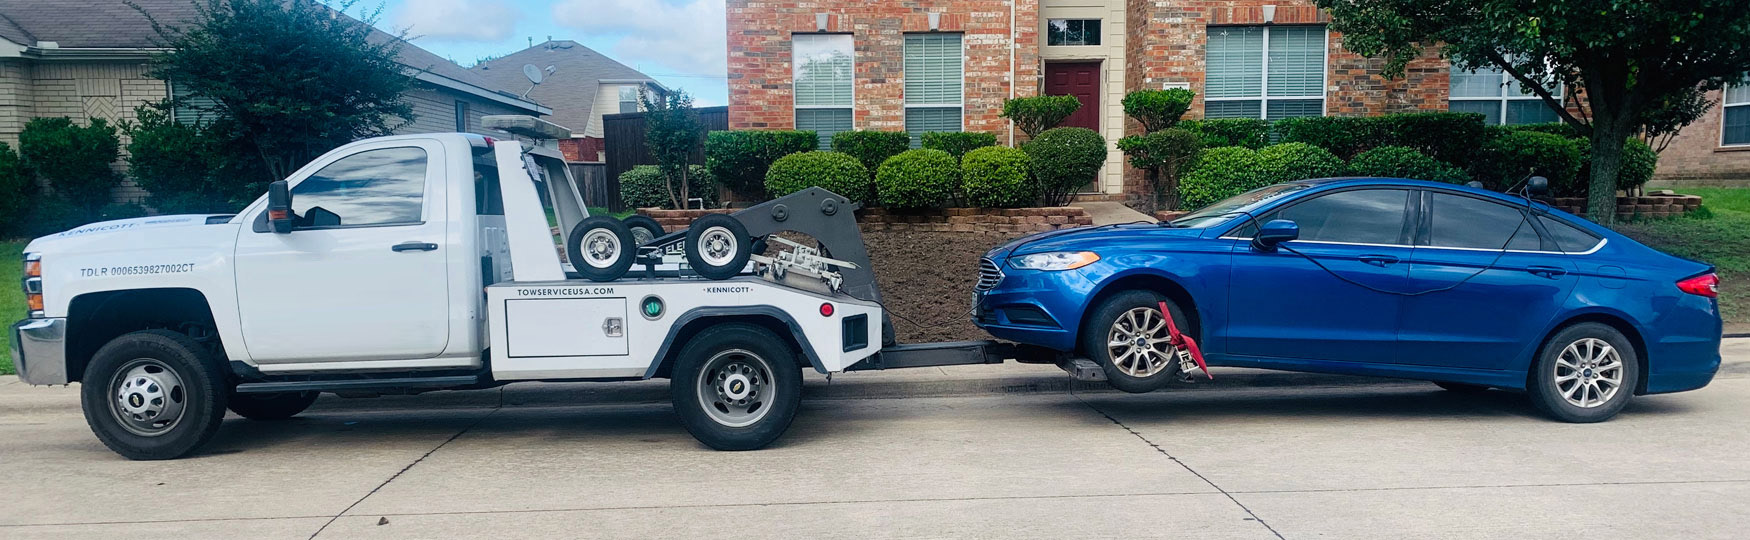 Wheel Lift Tow Truck In NC Hauling Blue Car